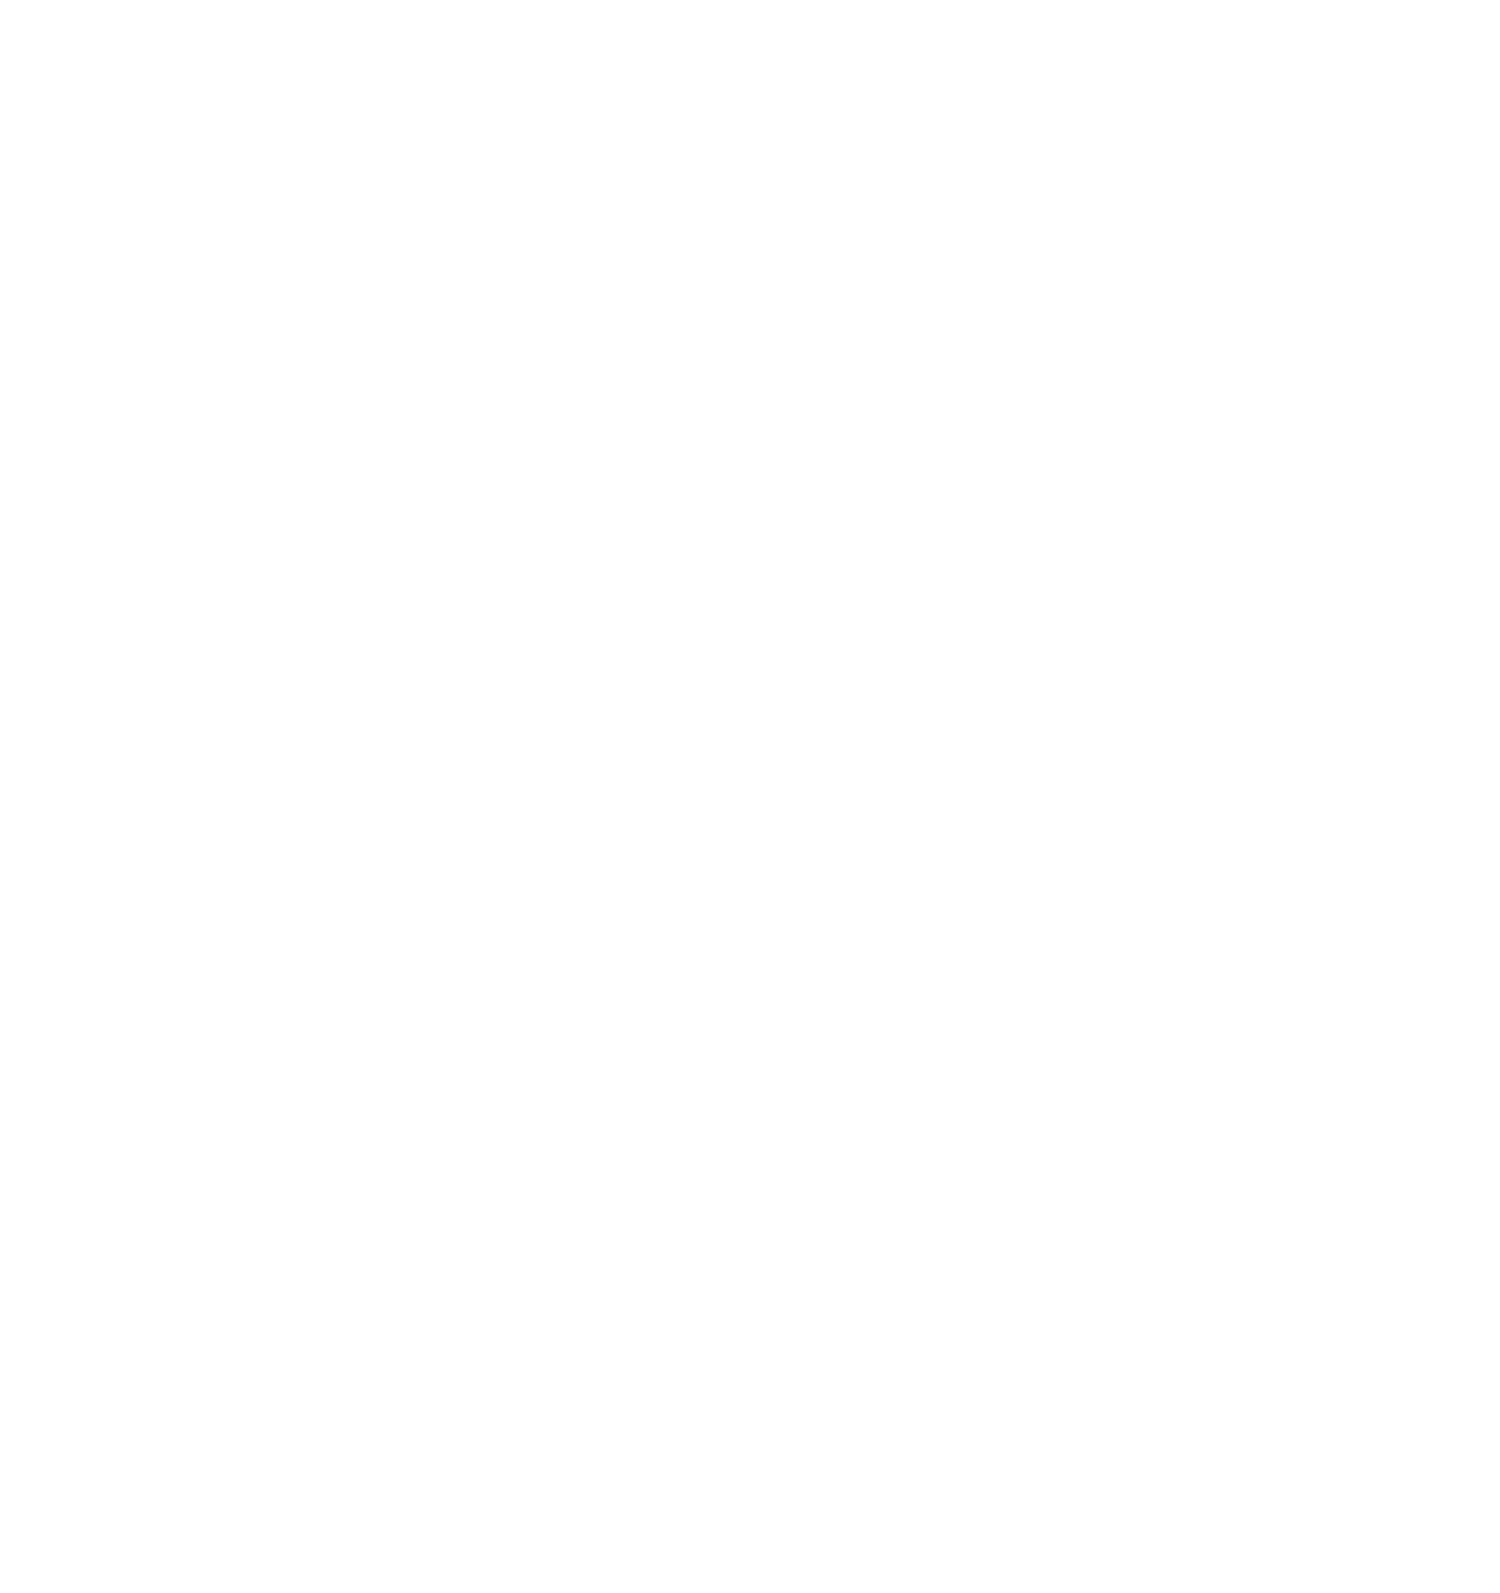 Kendall & Davis, Inc.